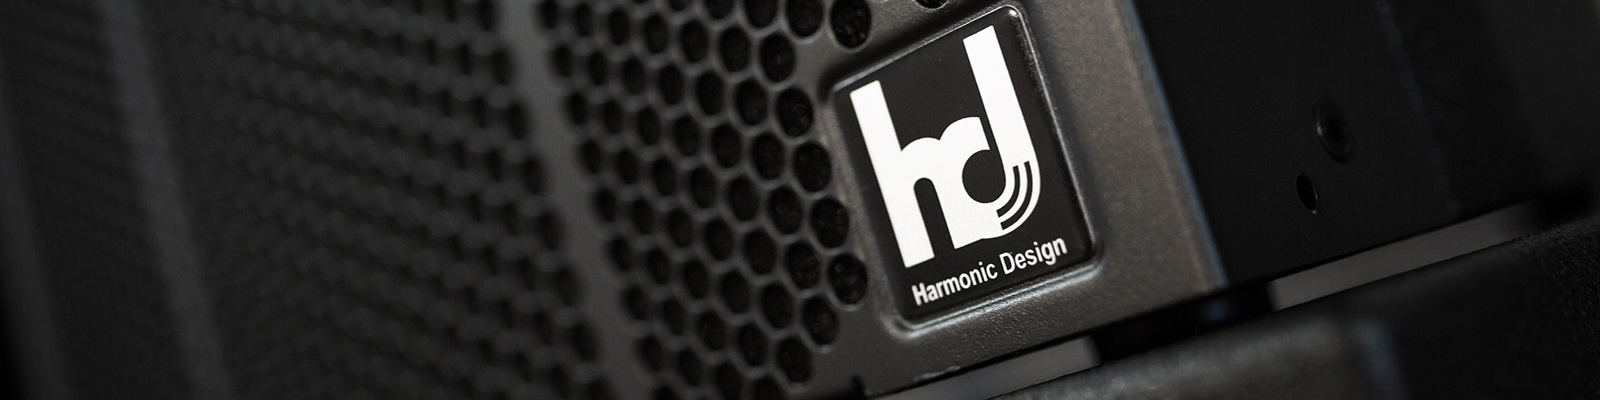 hd-HLS24-Detail1600.jpg